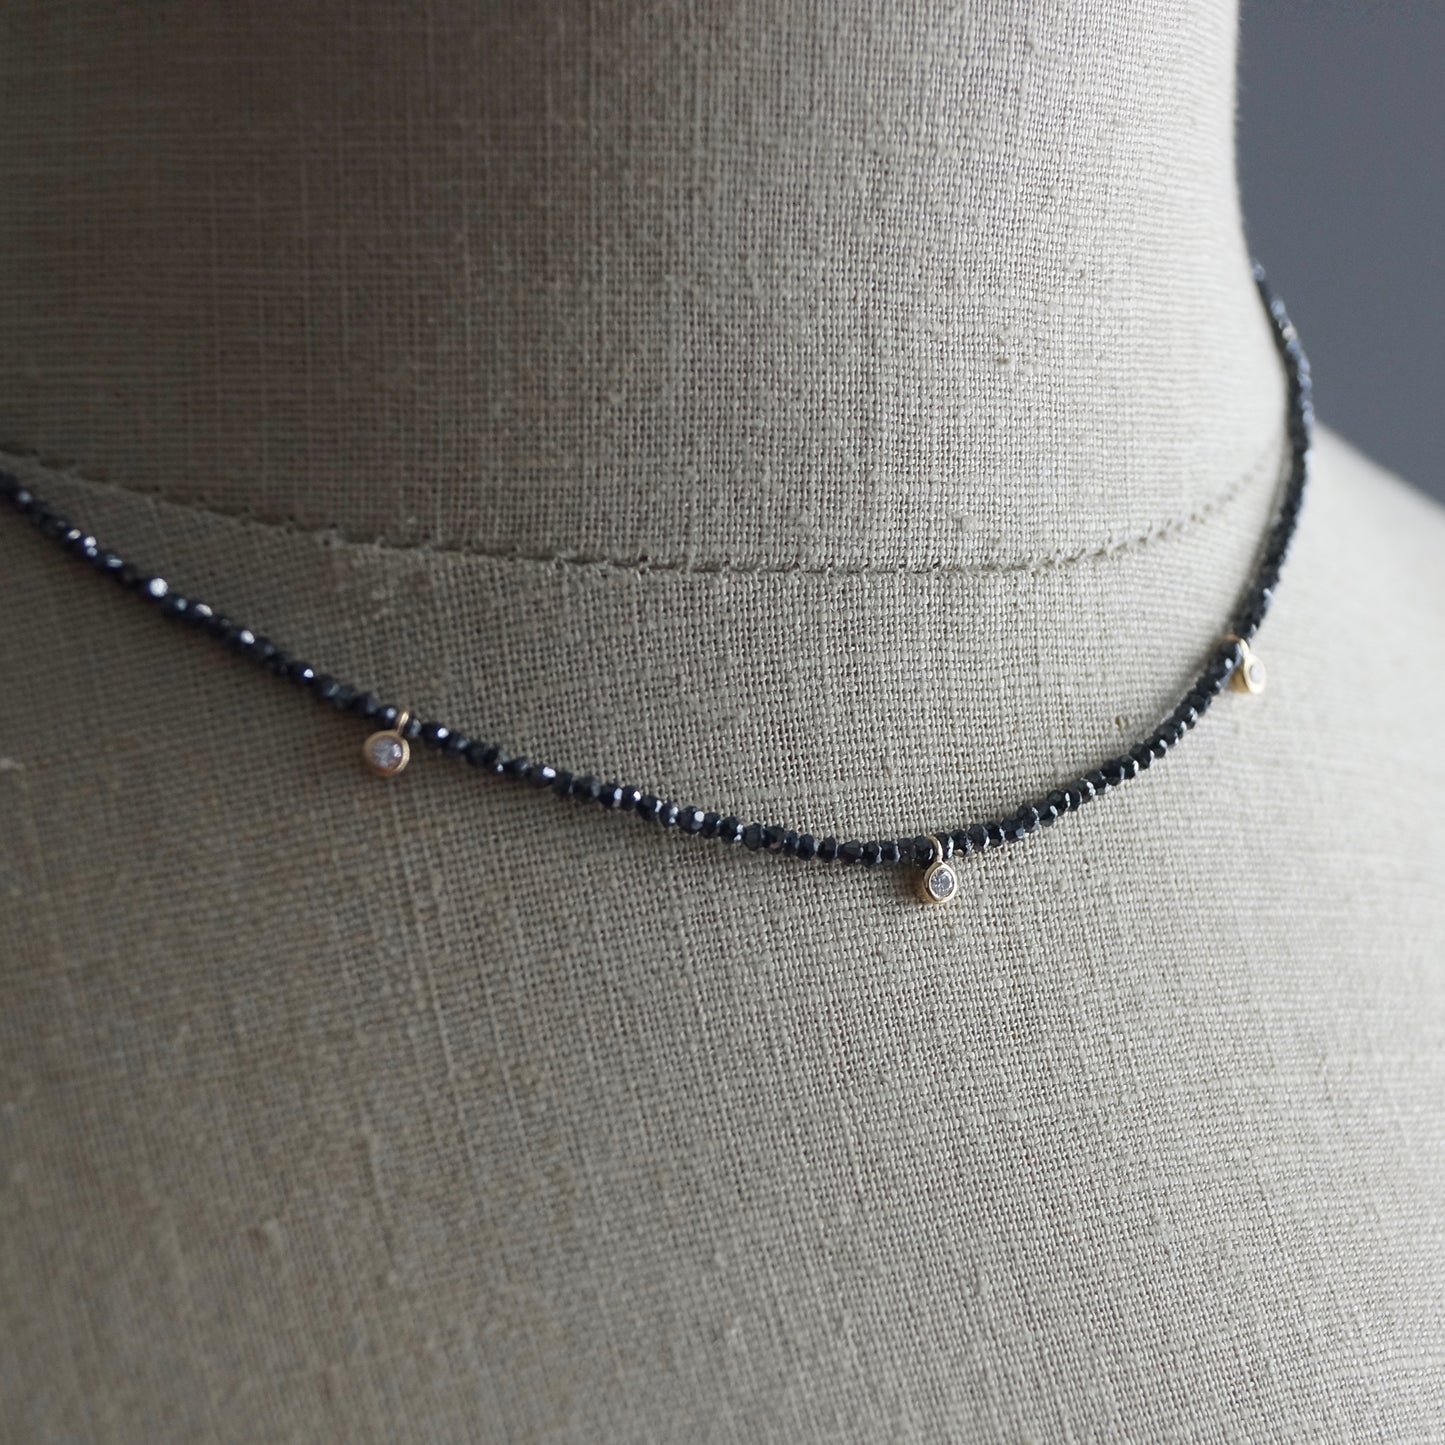 Black Diamond Necklace With Diamond Charms |  1.7-2.2mm